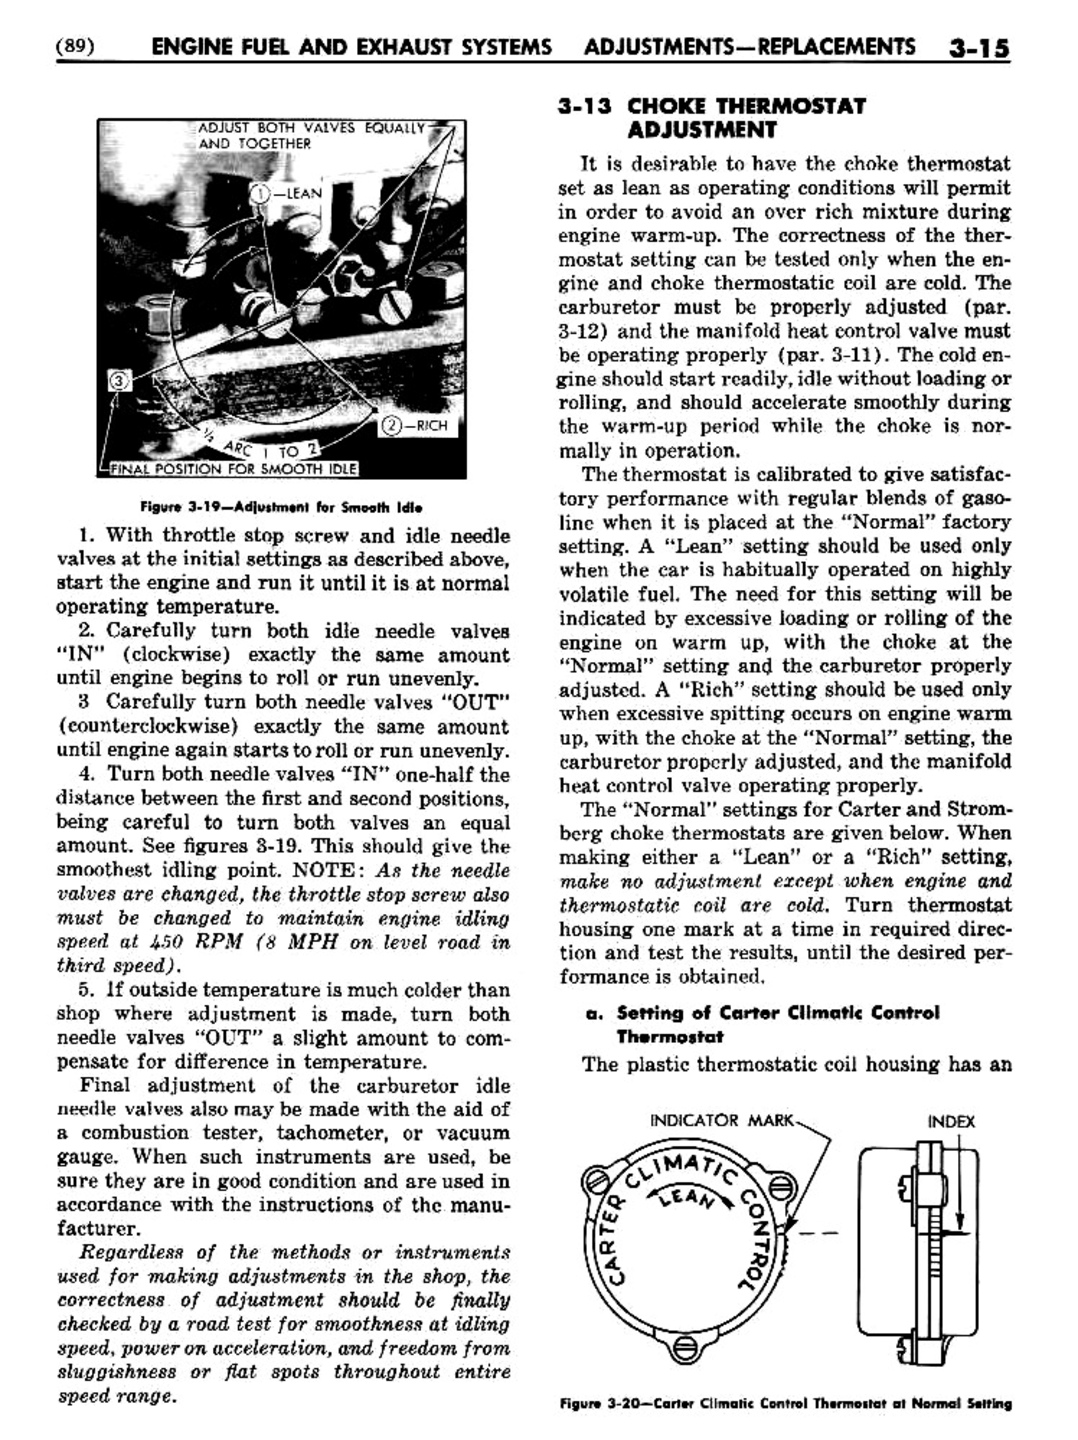 n_04 1948 Buick Shop Manual - Engine Fuel & Exhaust-015-015.jpg